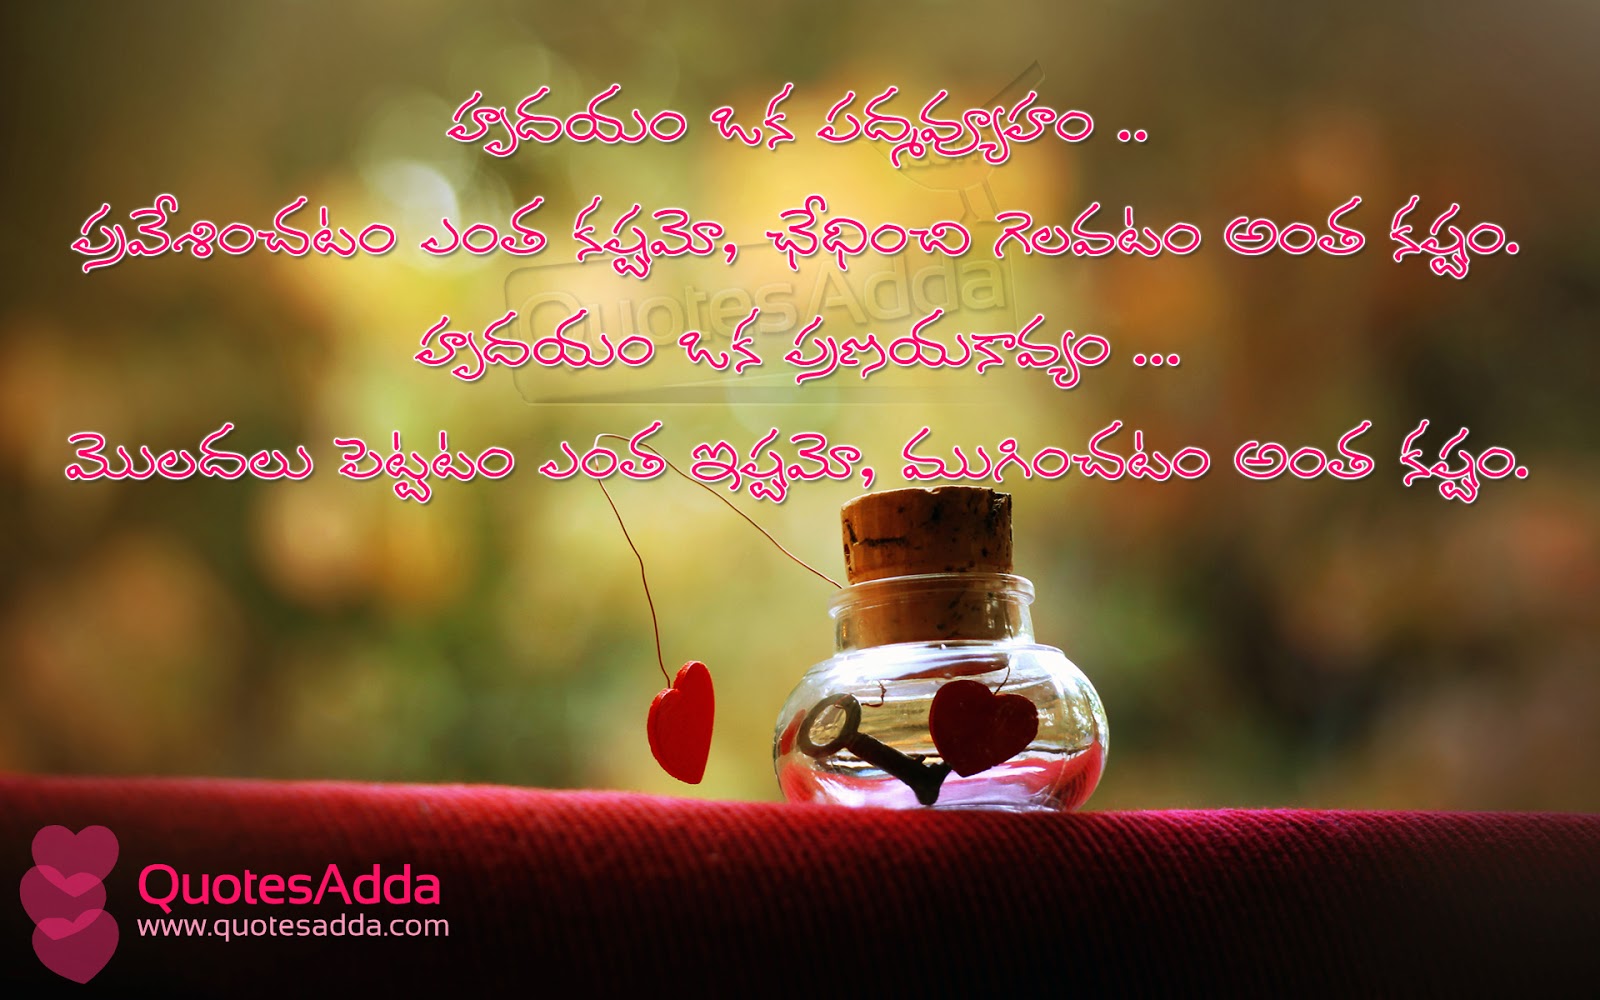 Beautiful Sad Quotes For Beautiful telugu love quotation quotesadda